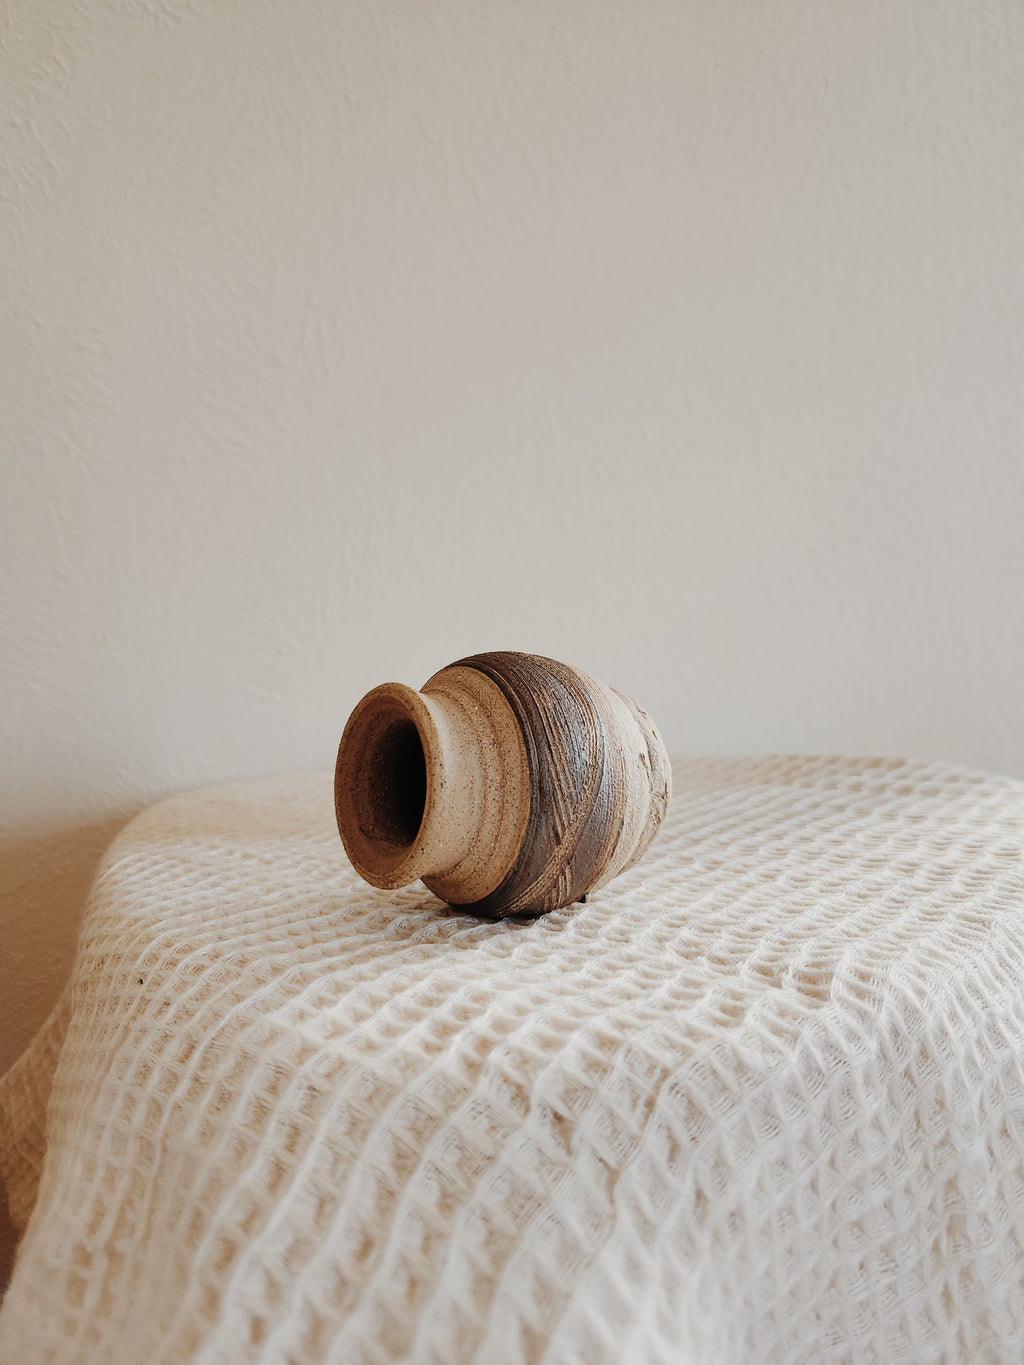 Mini Handmade Ceramic | Nuetral pottery